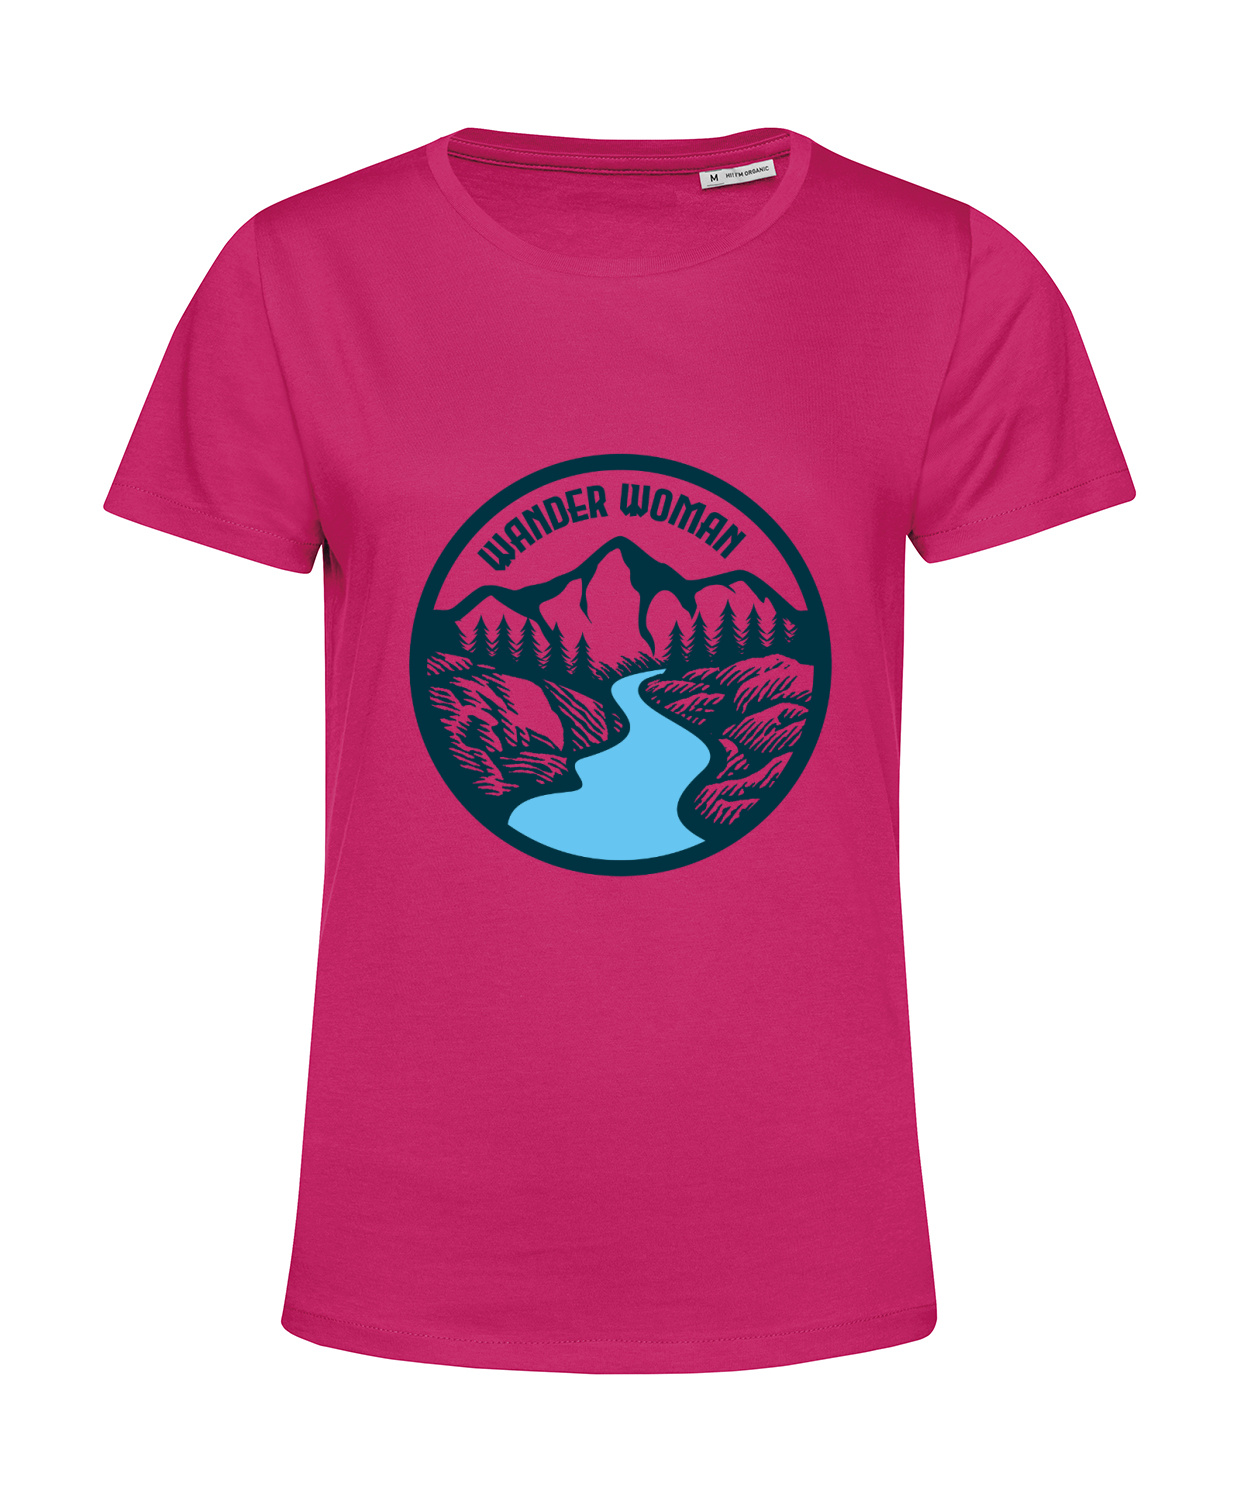 Nachhaltiges T-Shirt Damen Outdoor Wander Woman